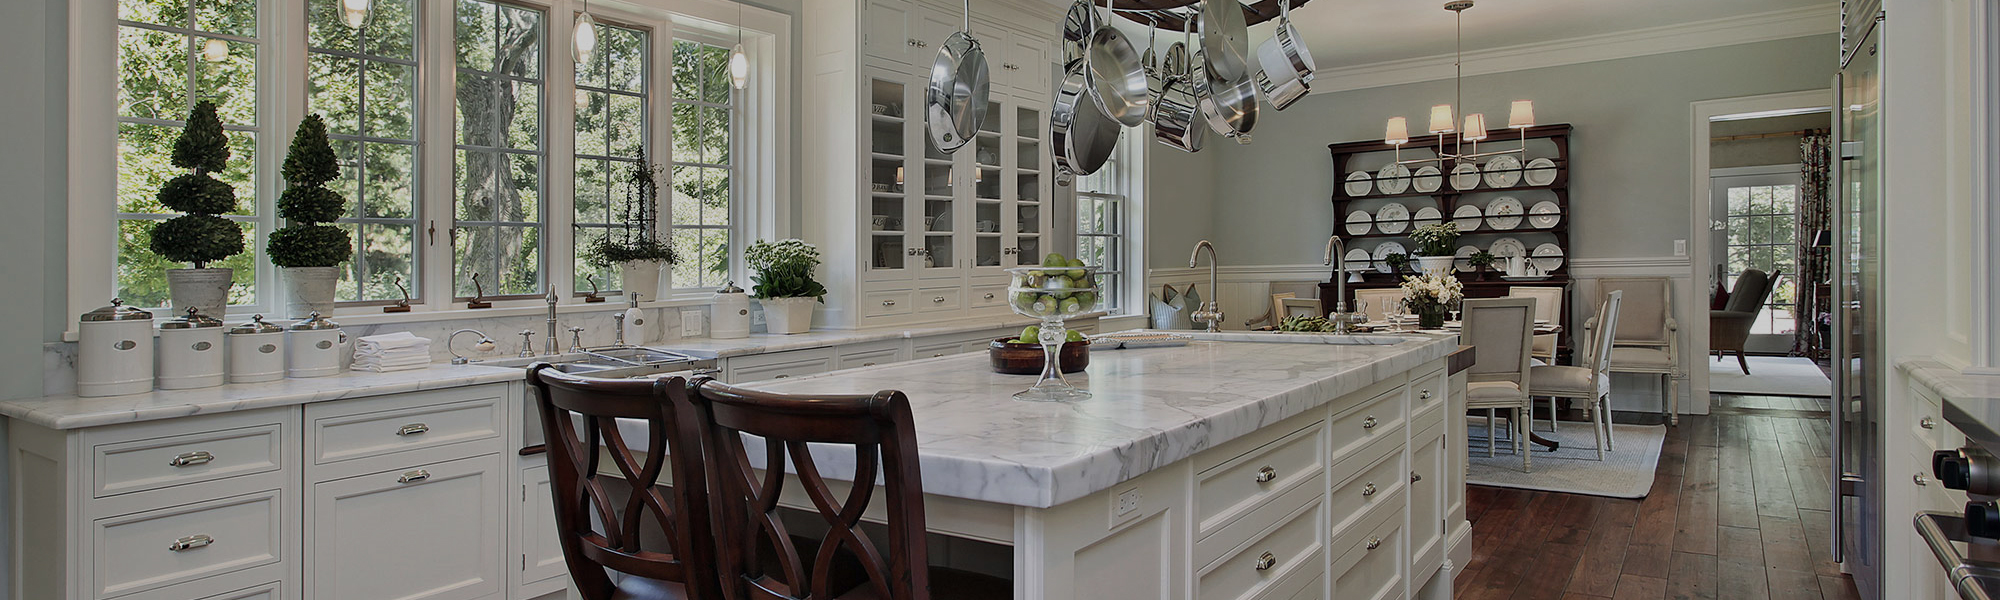 custom cabinetry and kitchen design, granite countertops in